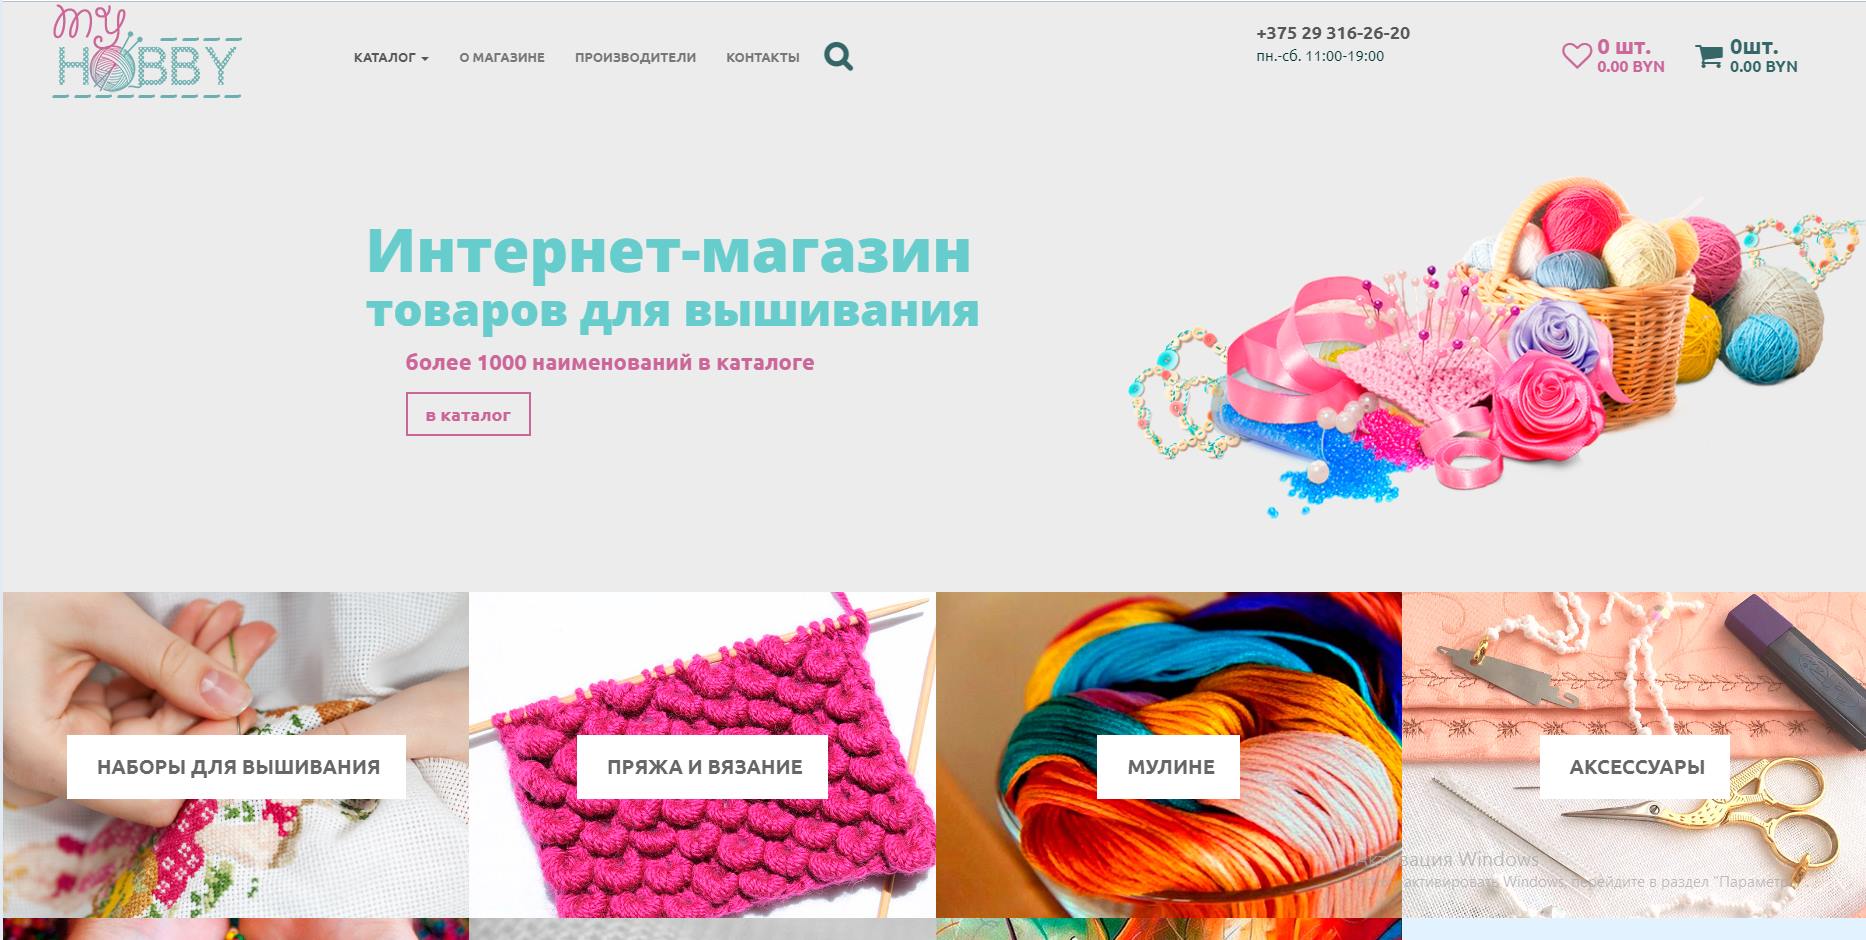 Интернет-магазин MyHobby.by - товары для вышивания